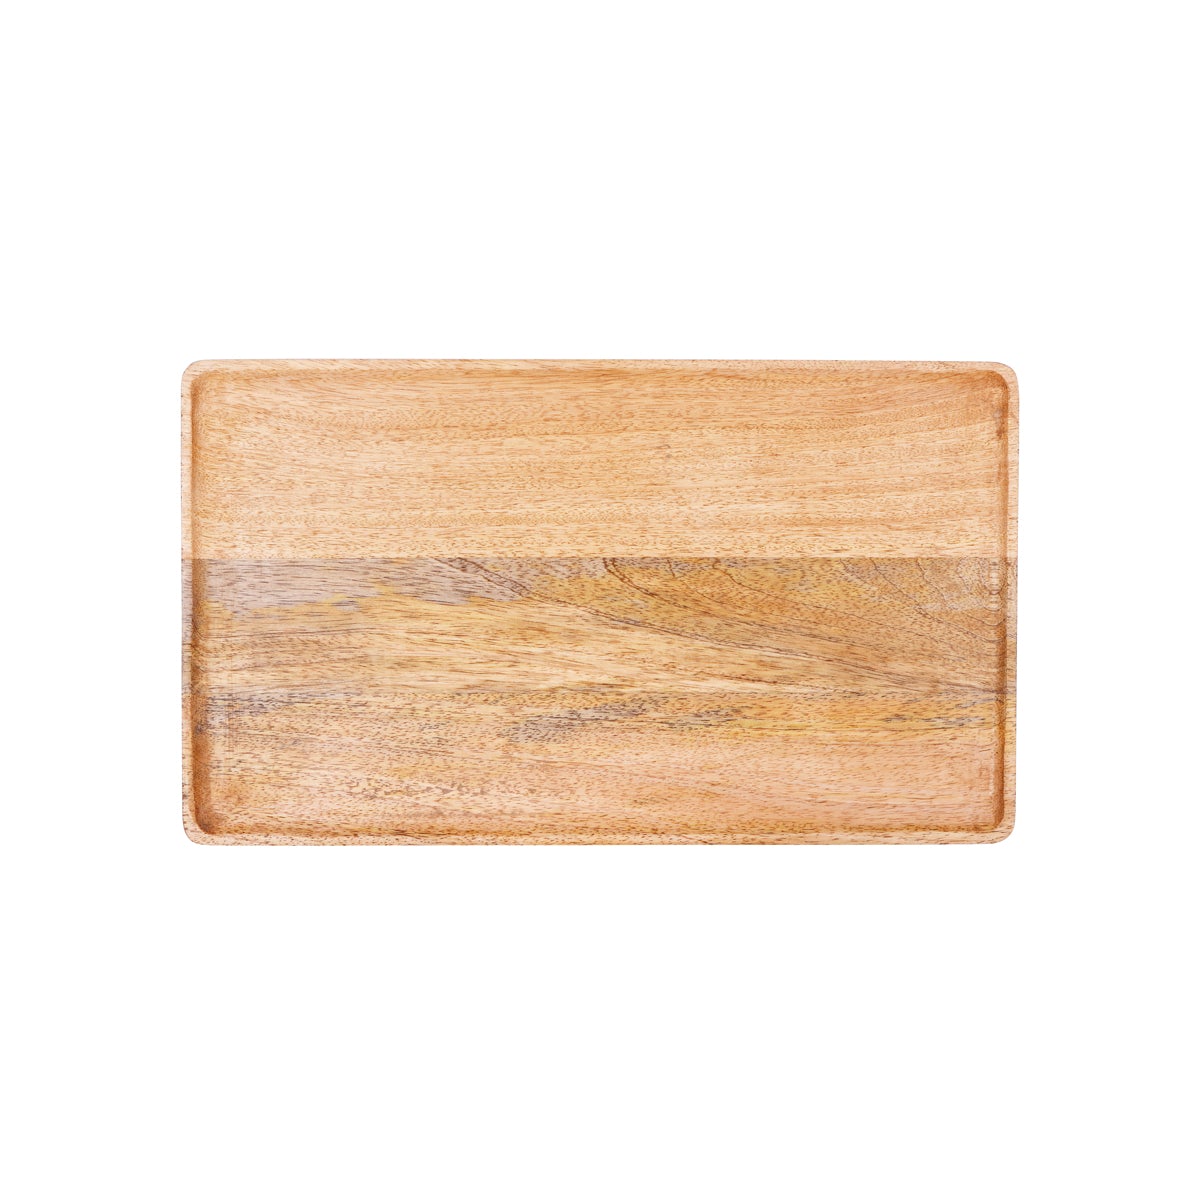 '04910 Chef Inox Mangowood Rectangular Serving Board Natural 430x250x15mm Tomkin Australia Hospitality Supplies